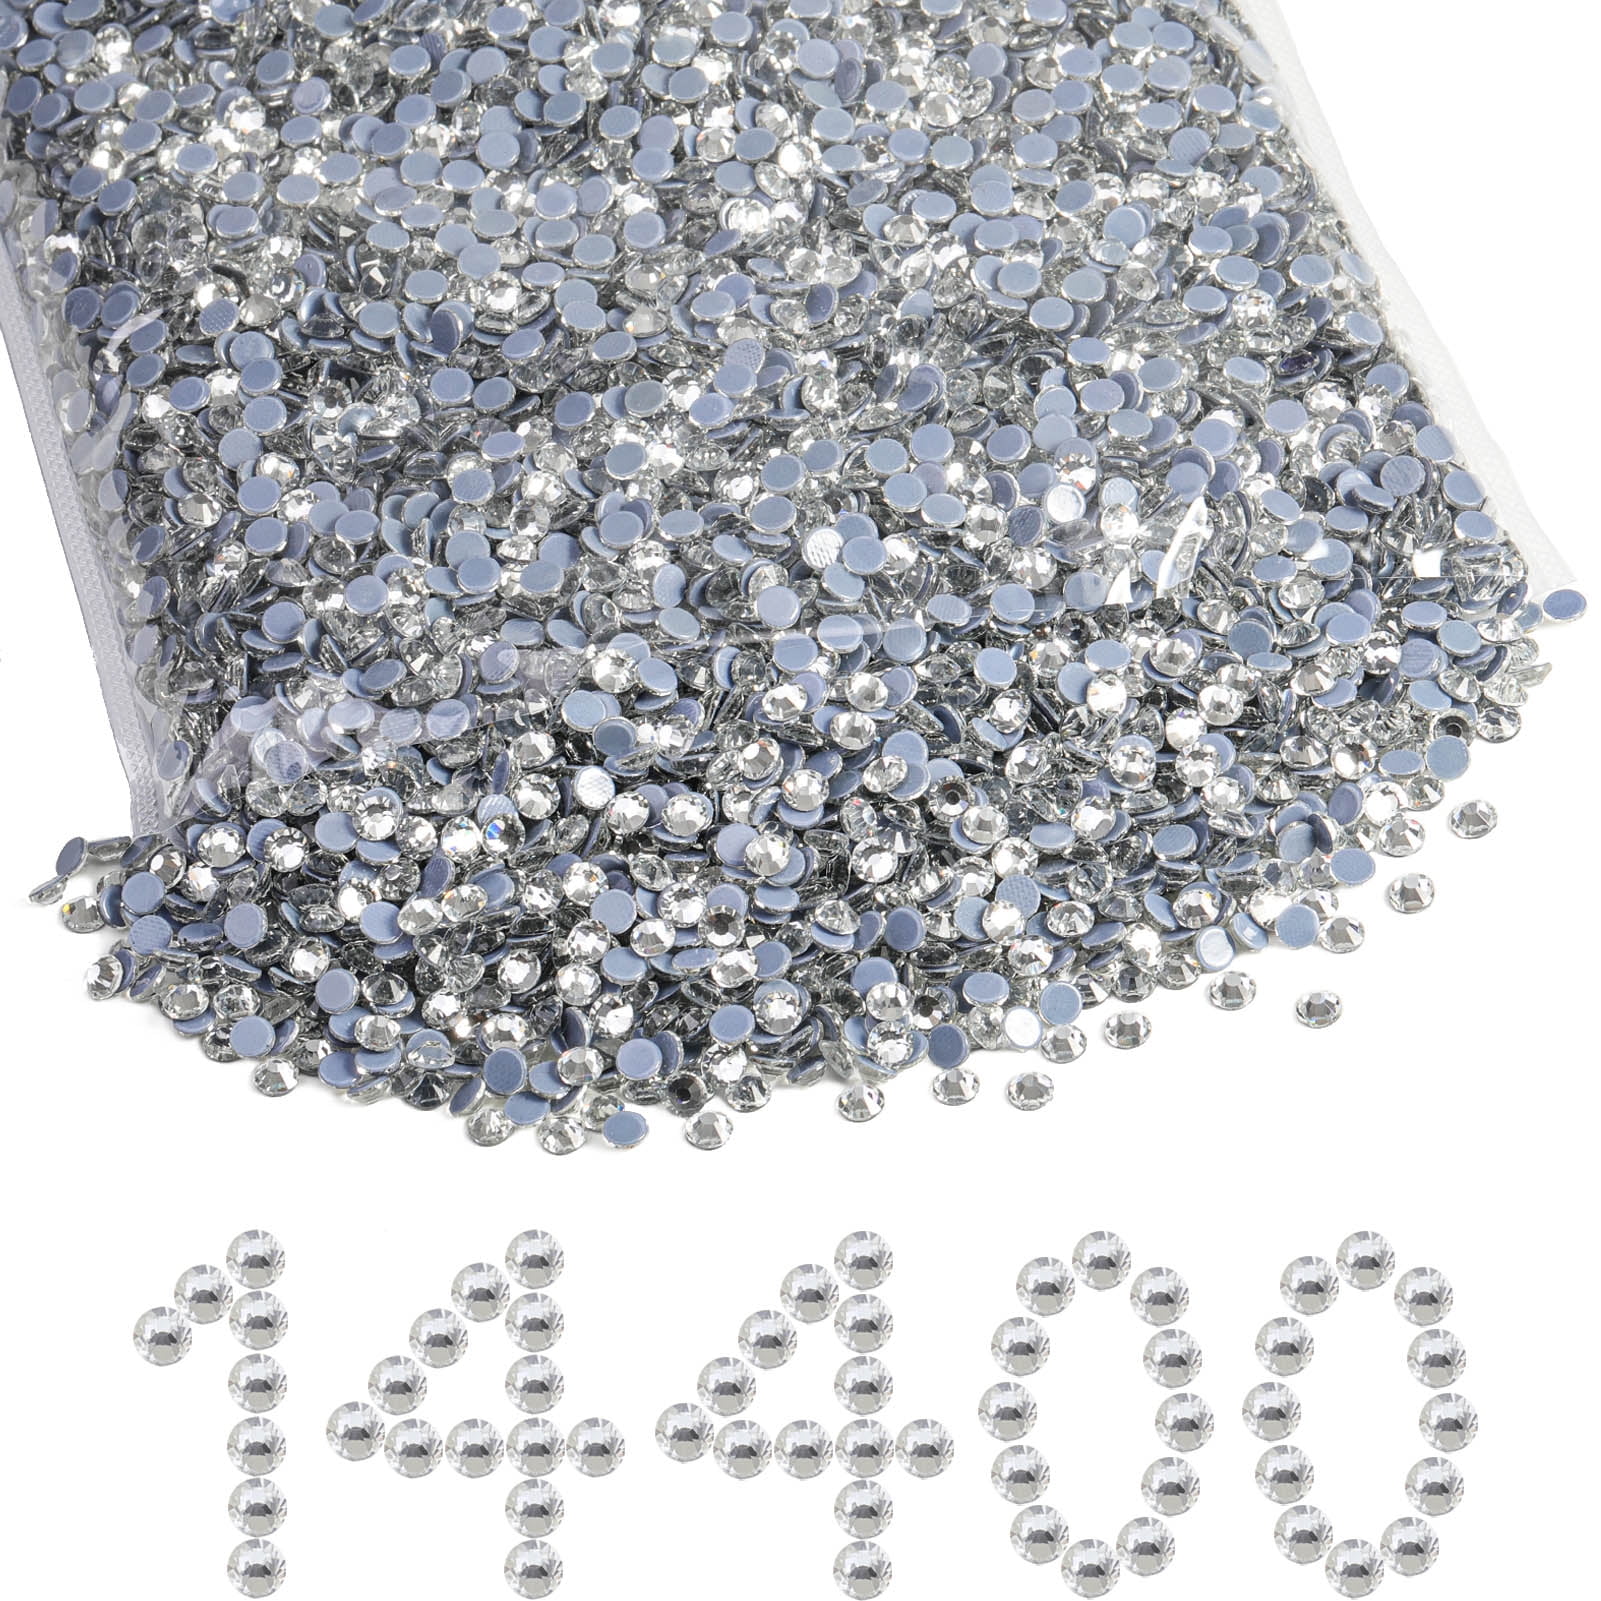 New ThreadNanny Czech Quality 10gross (1440pcs) Hotfix Rhinestones Crystals - 5mm/20ss, Navy Blue (Saphire) Color